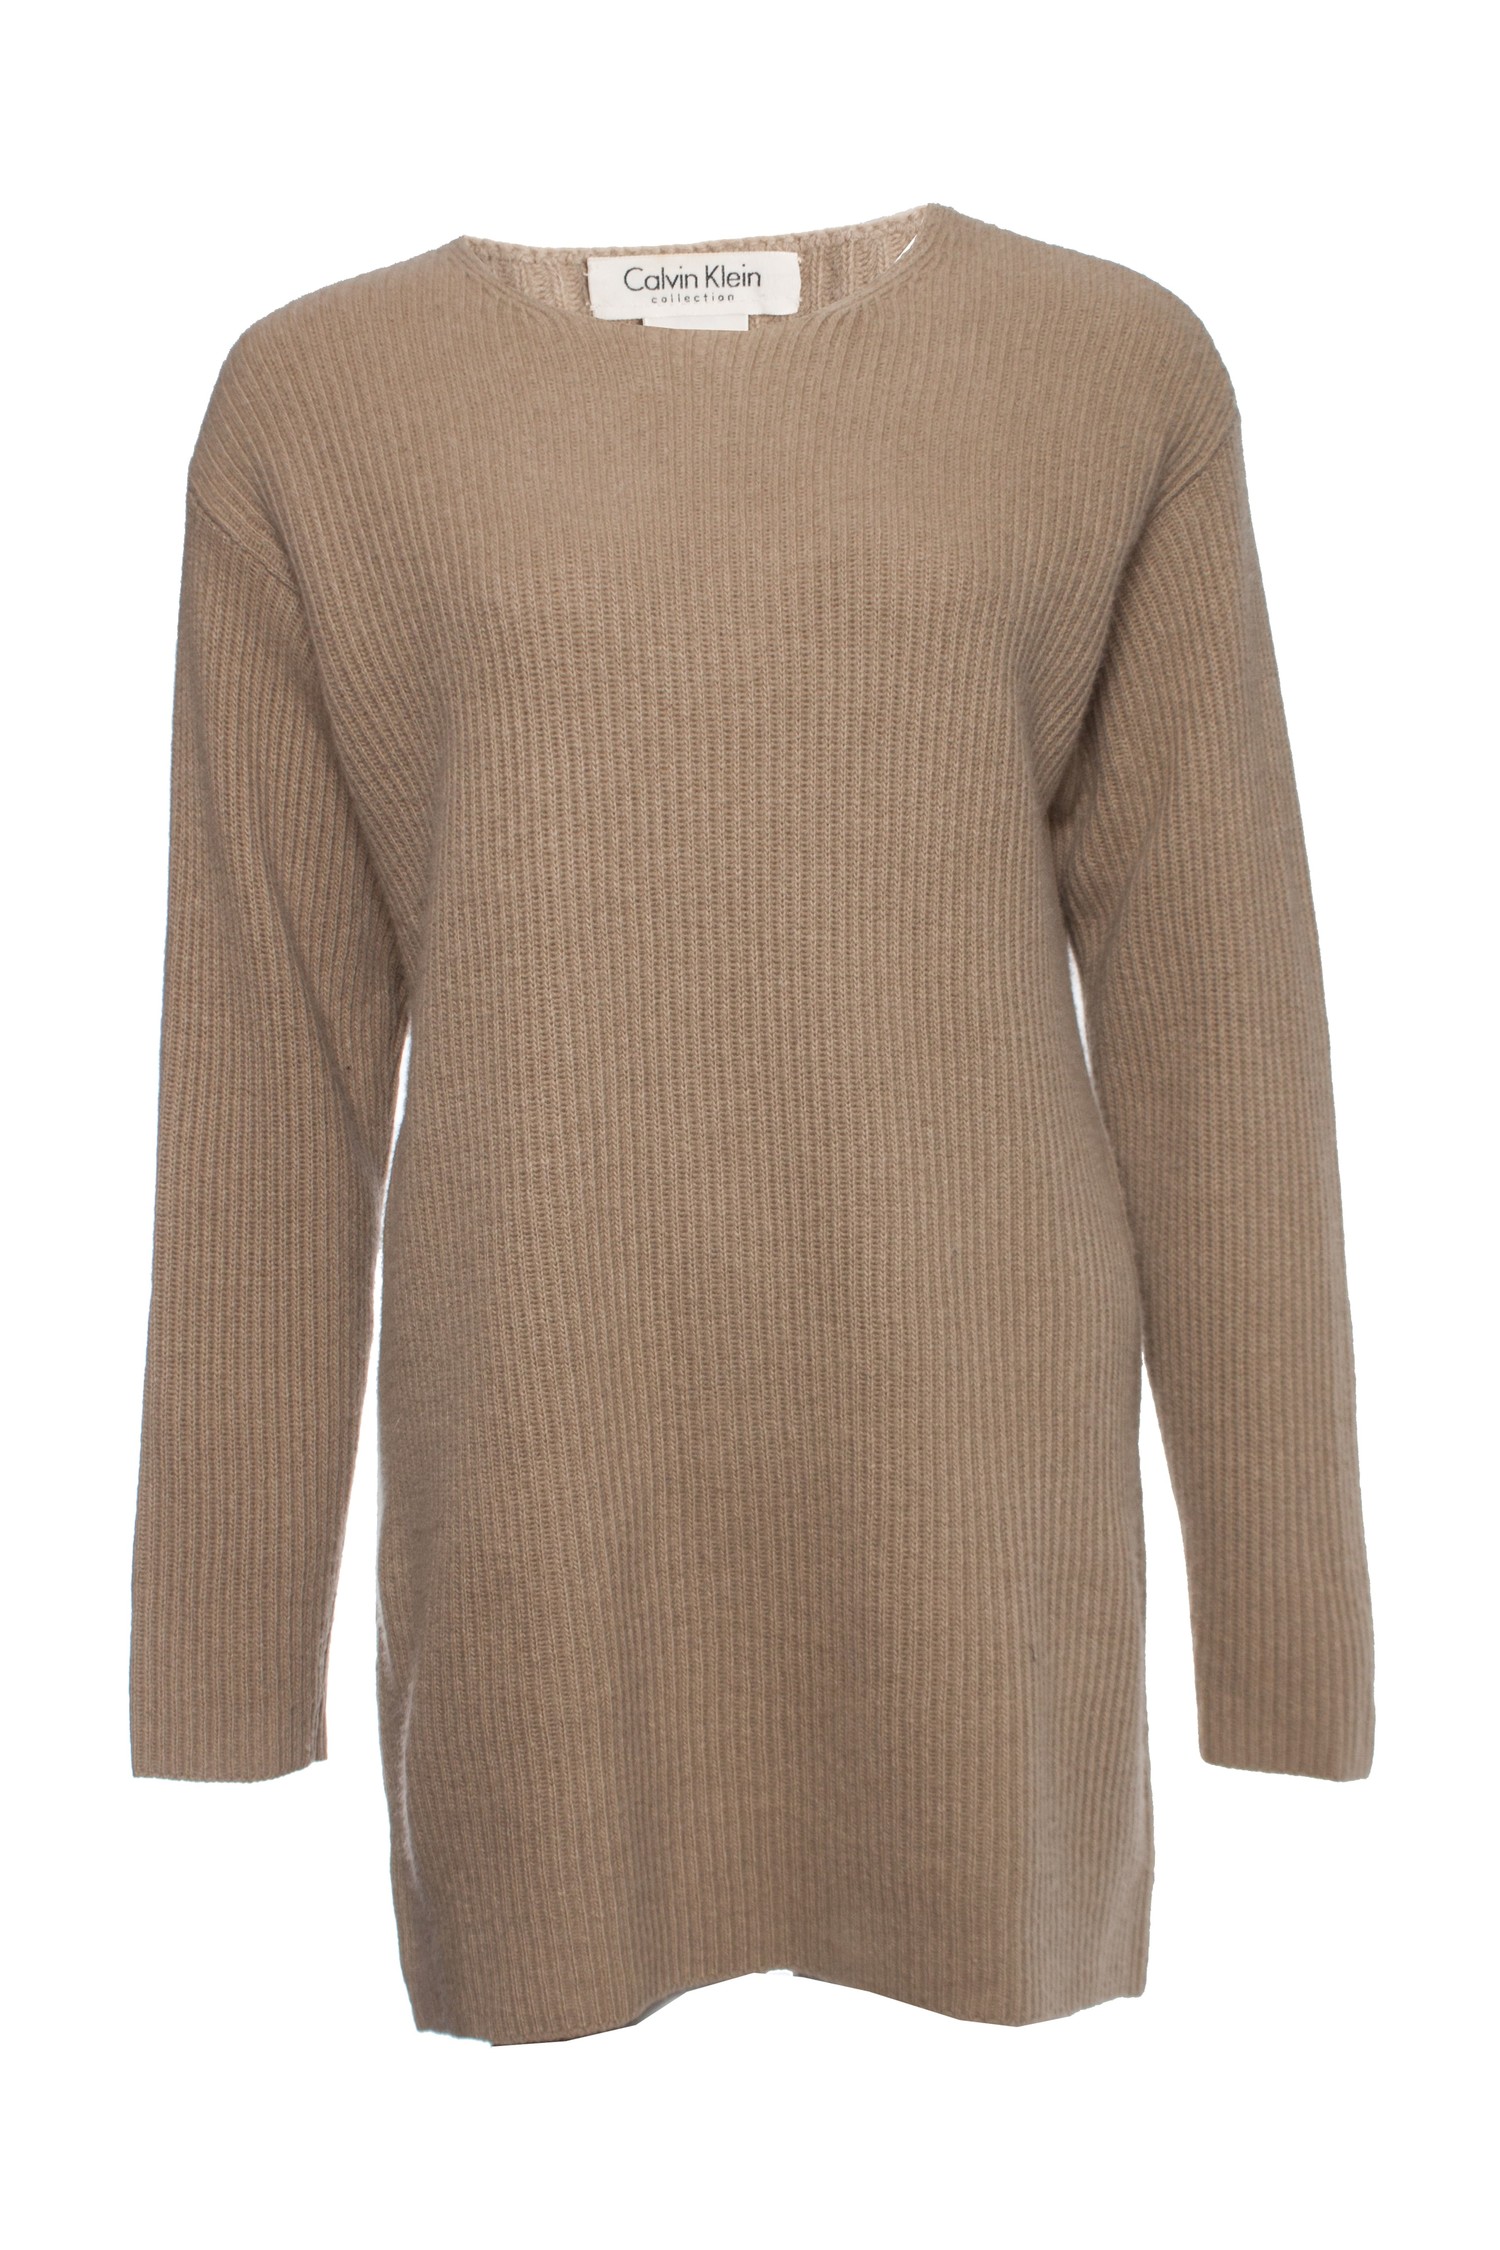 Calvin Klein, oversized wool and cashmere sweater. - Unique Designer Pieces